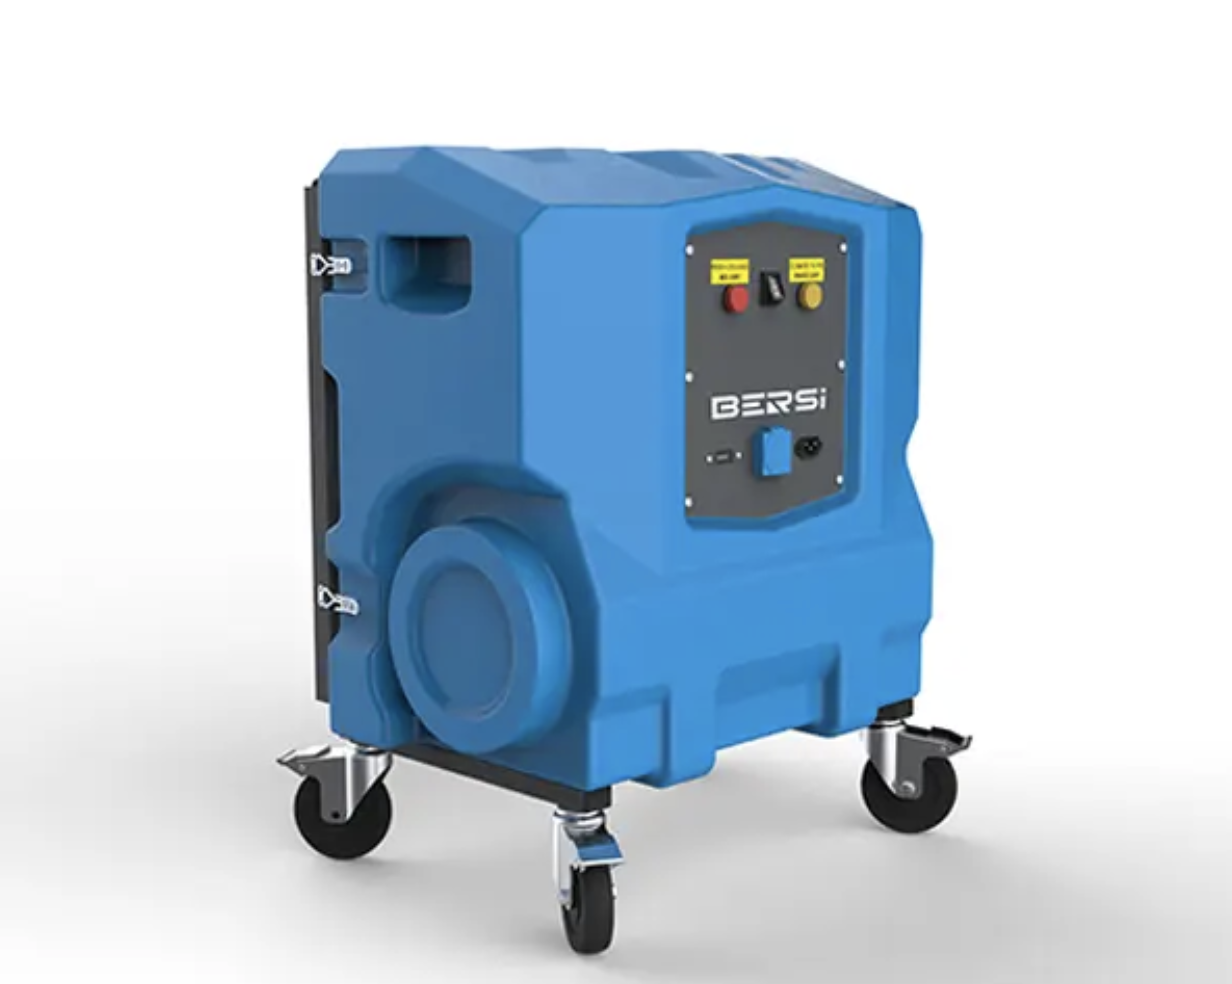 B2000: Powerful, Portable Industrial Air Scrubber for Clean Environments